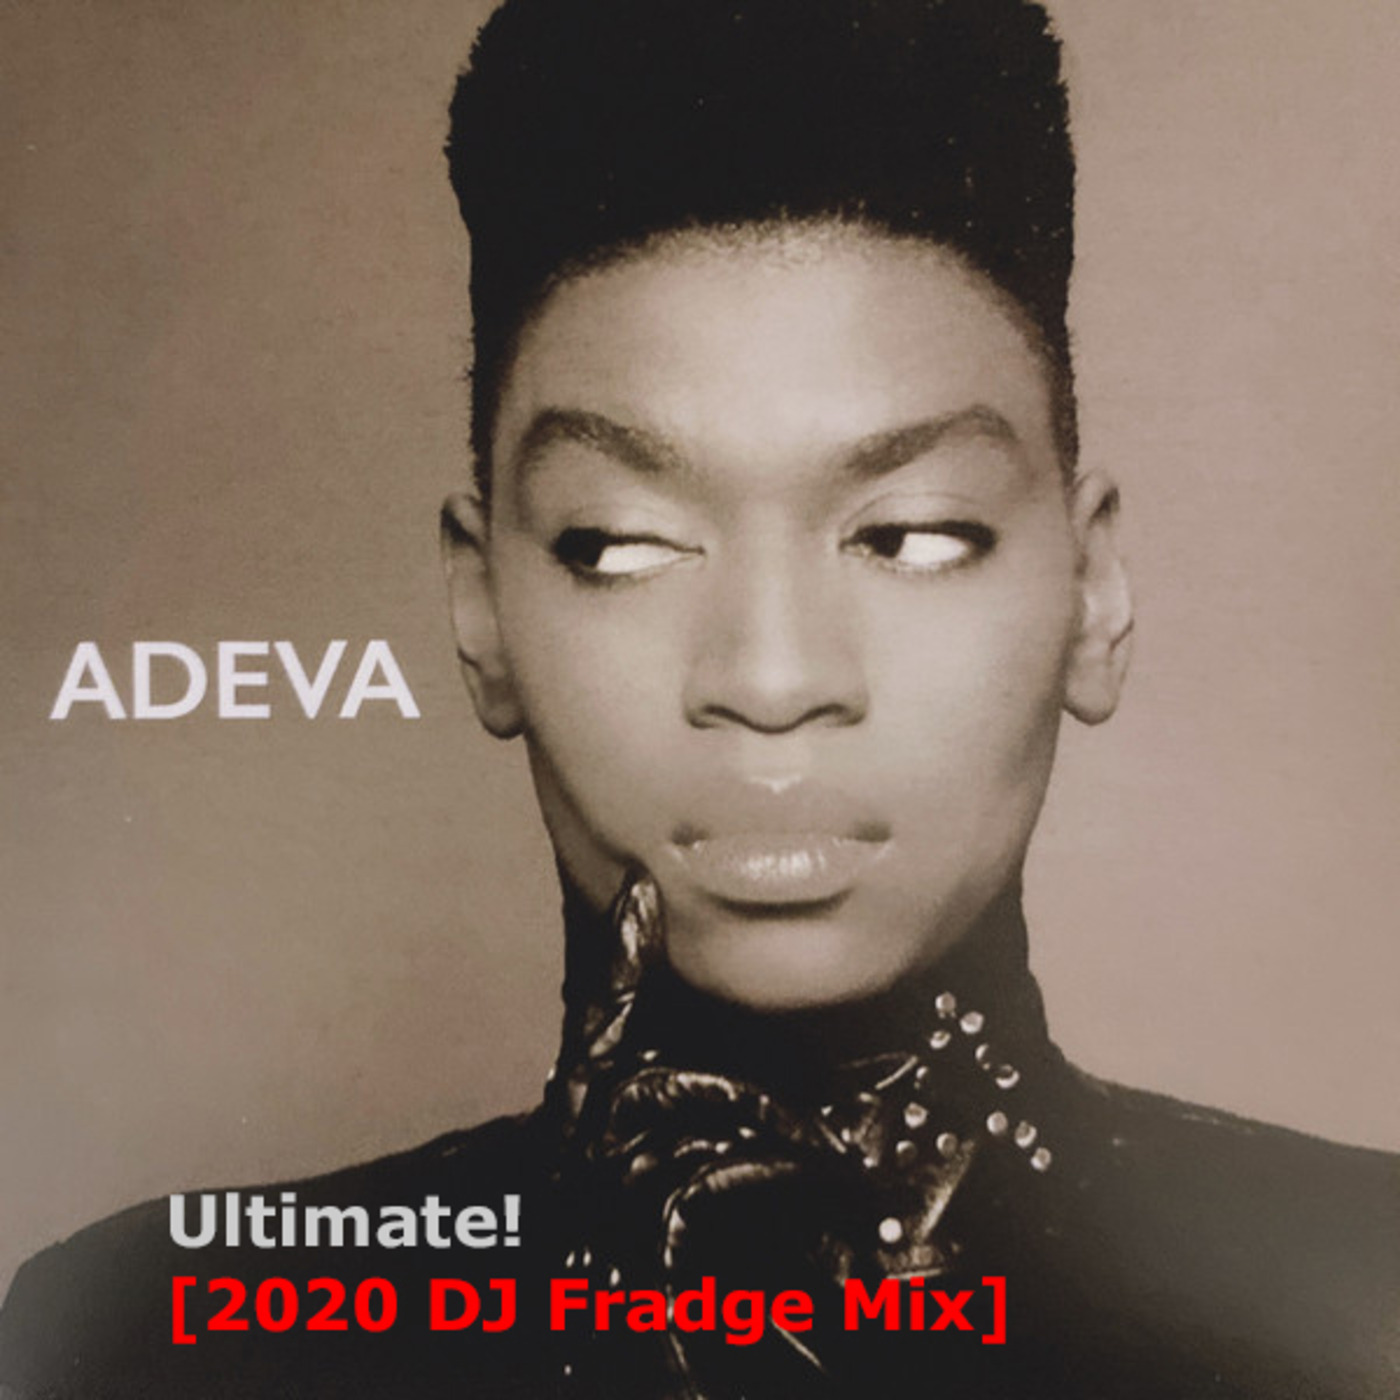 Adeva Ultimate! [2020 DJ Fradge Mix]